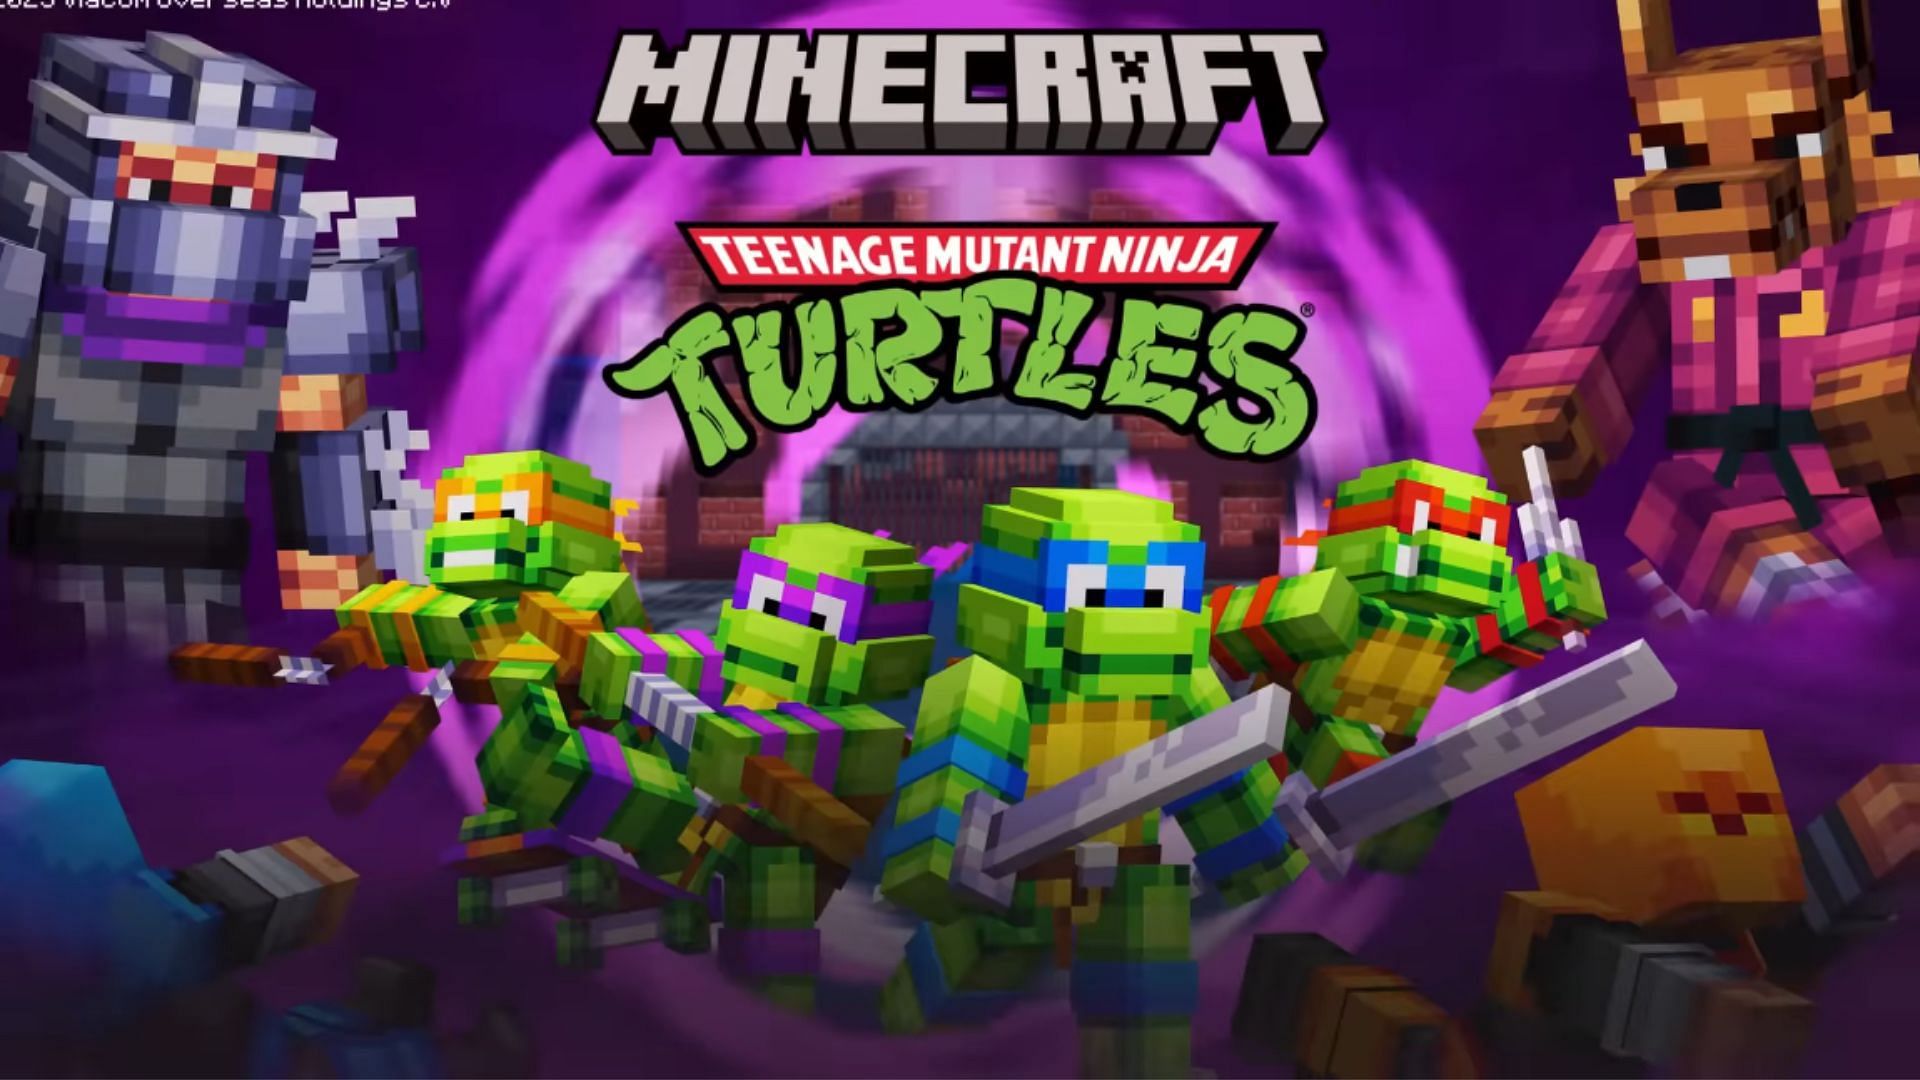 Minecraft x Teenage Mutant Ninja Turtles DLC: How to download, new skins, and more (Image via Mojang)